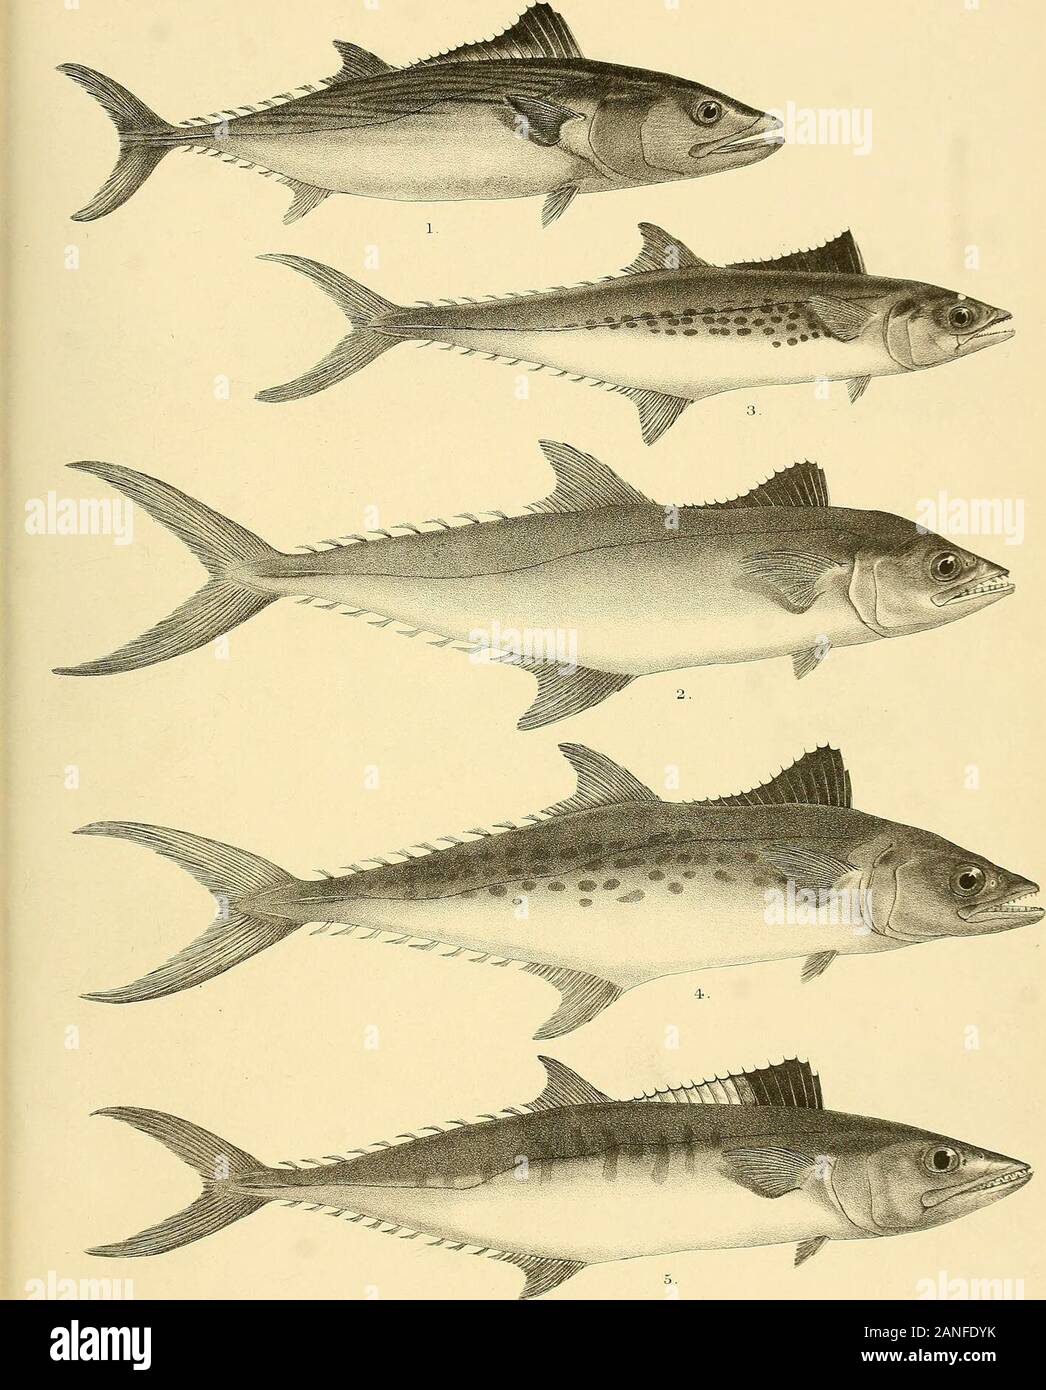 The fishes of India; being a natural history of the fishes known to inhabit the seas and fresh waters of India, Burma, and Ceylon . G.H.Ford del Suzim ith. Mmtera Bros. imp. 1, CYBIUM GUTTATUM (YOUNG). 2, ELACATE NIGRA. 4, URANOSCOPUS MARMORATUS. 5, ICHTHYSCOPUS 1NERME. 3, ECHENEIS BRACHYPTERA 6, PSEUDOSYNANCEIA MELANOSTIGMA. Days Fishes of India. Plate LVI.. G-.H.Ford del. RMm-tera lith. Mint era Bros - imp. 1, PELAMYS CHILENS1S. 2,CYBIUM KUHL1I. 3, C. INTEKRUPTTJM.5, C . COMMERS ONII. 4-, C. GUTTATUM. Days Fishes of India. Plate LVH. Stock Photo